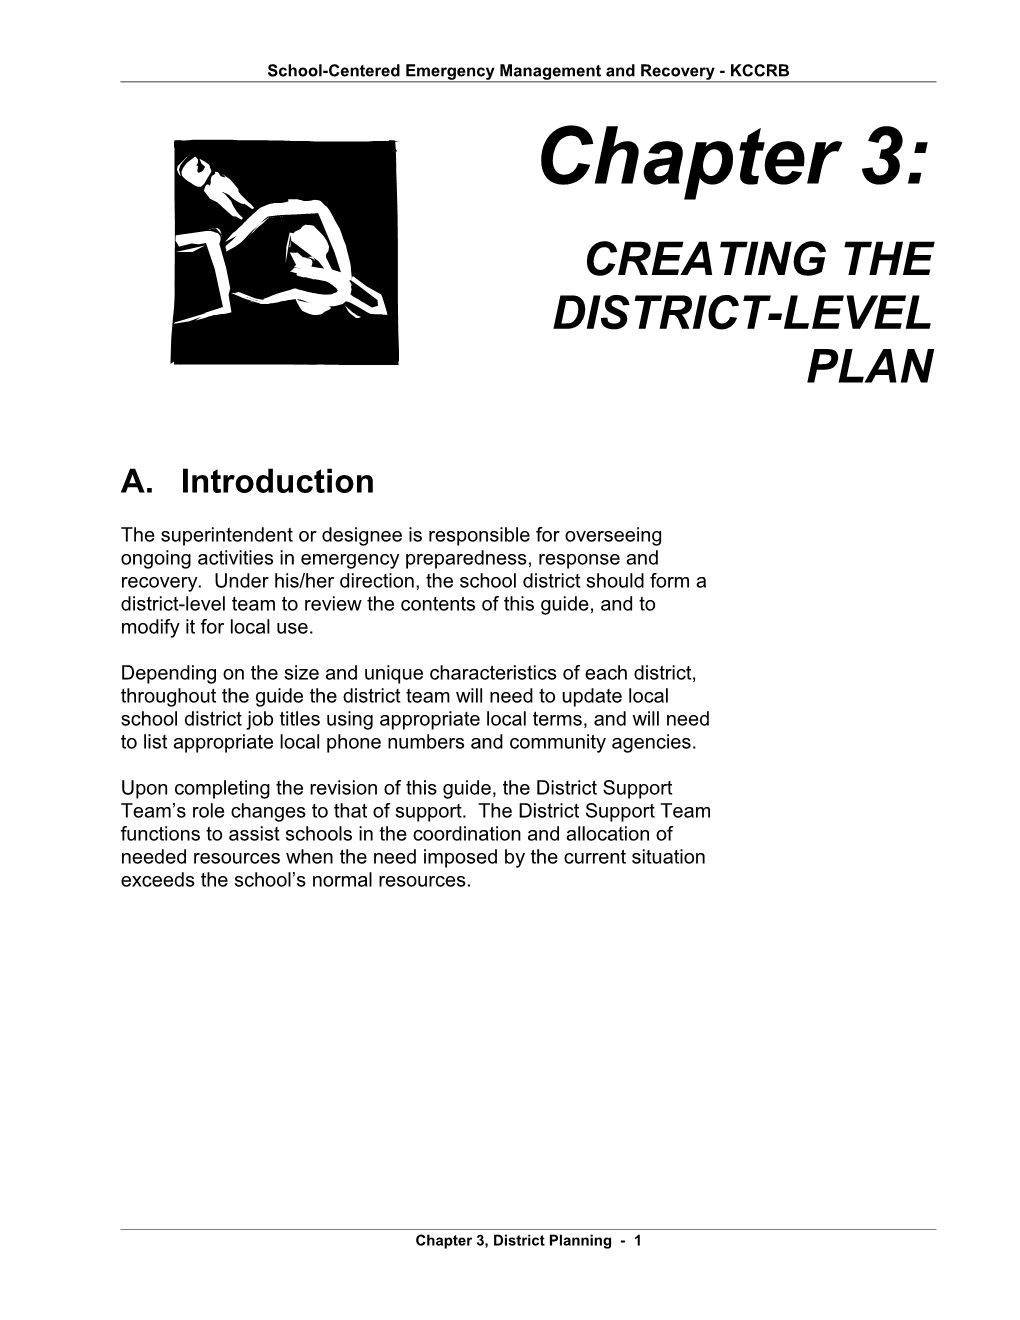 Ch-3 District Planning